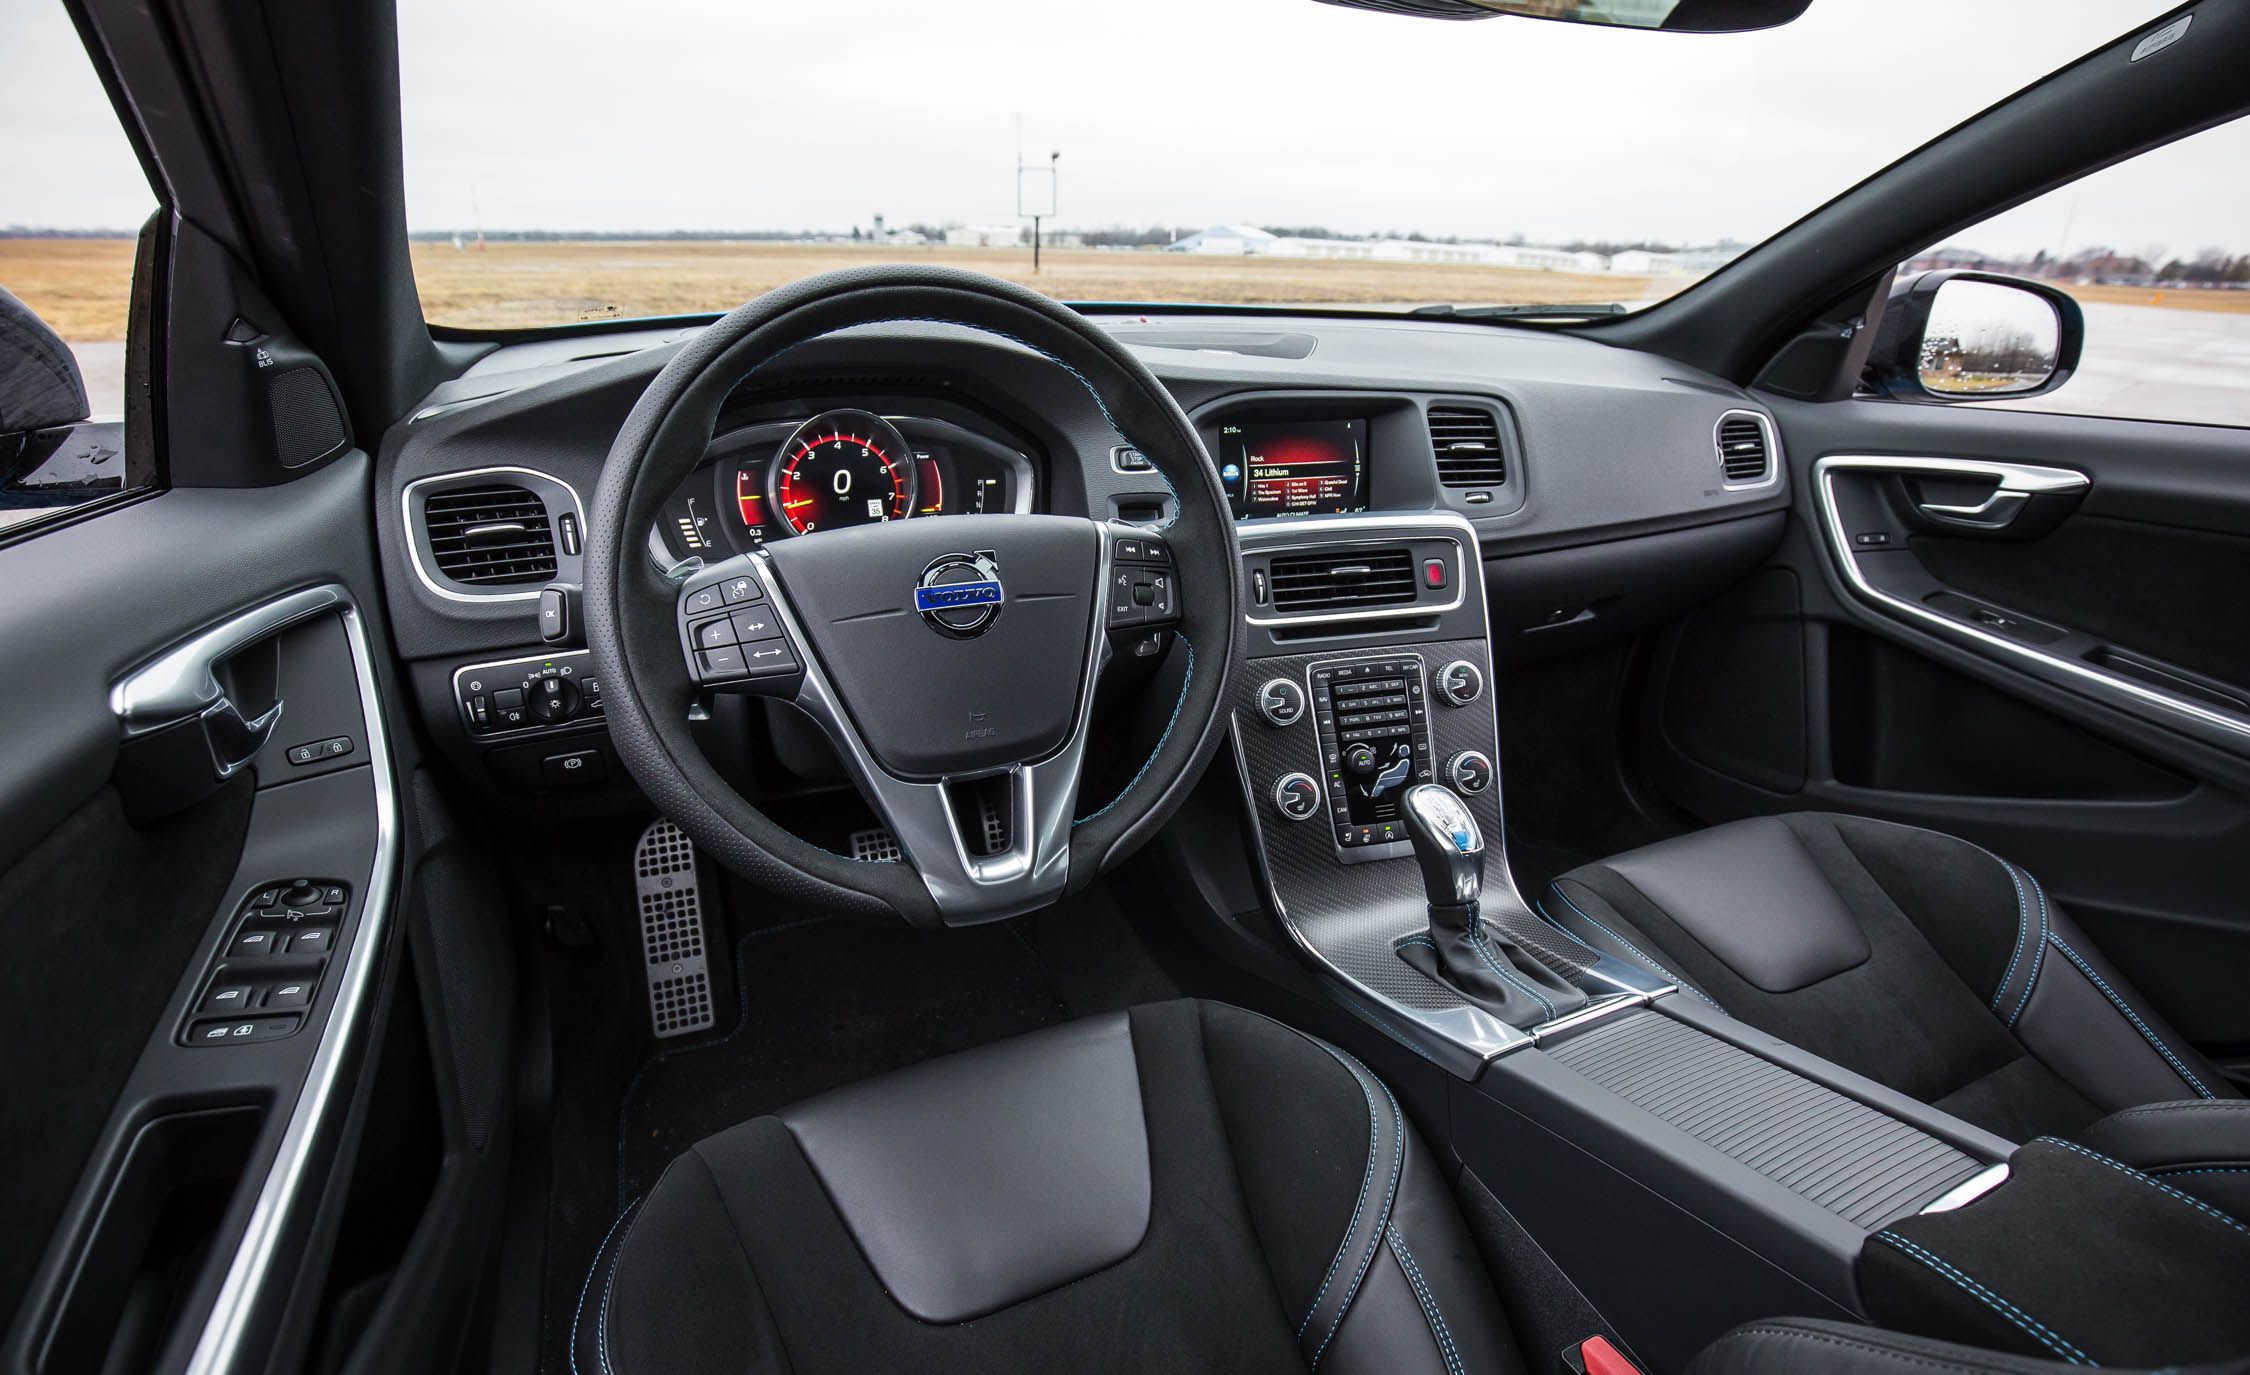 2017 Volvo V60 Polestar Interior Cockpit And Dash (View 52 of 53)